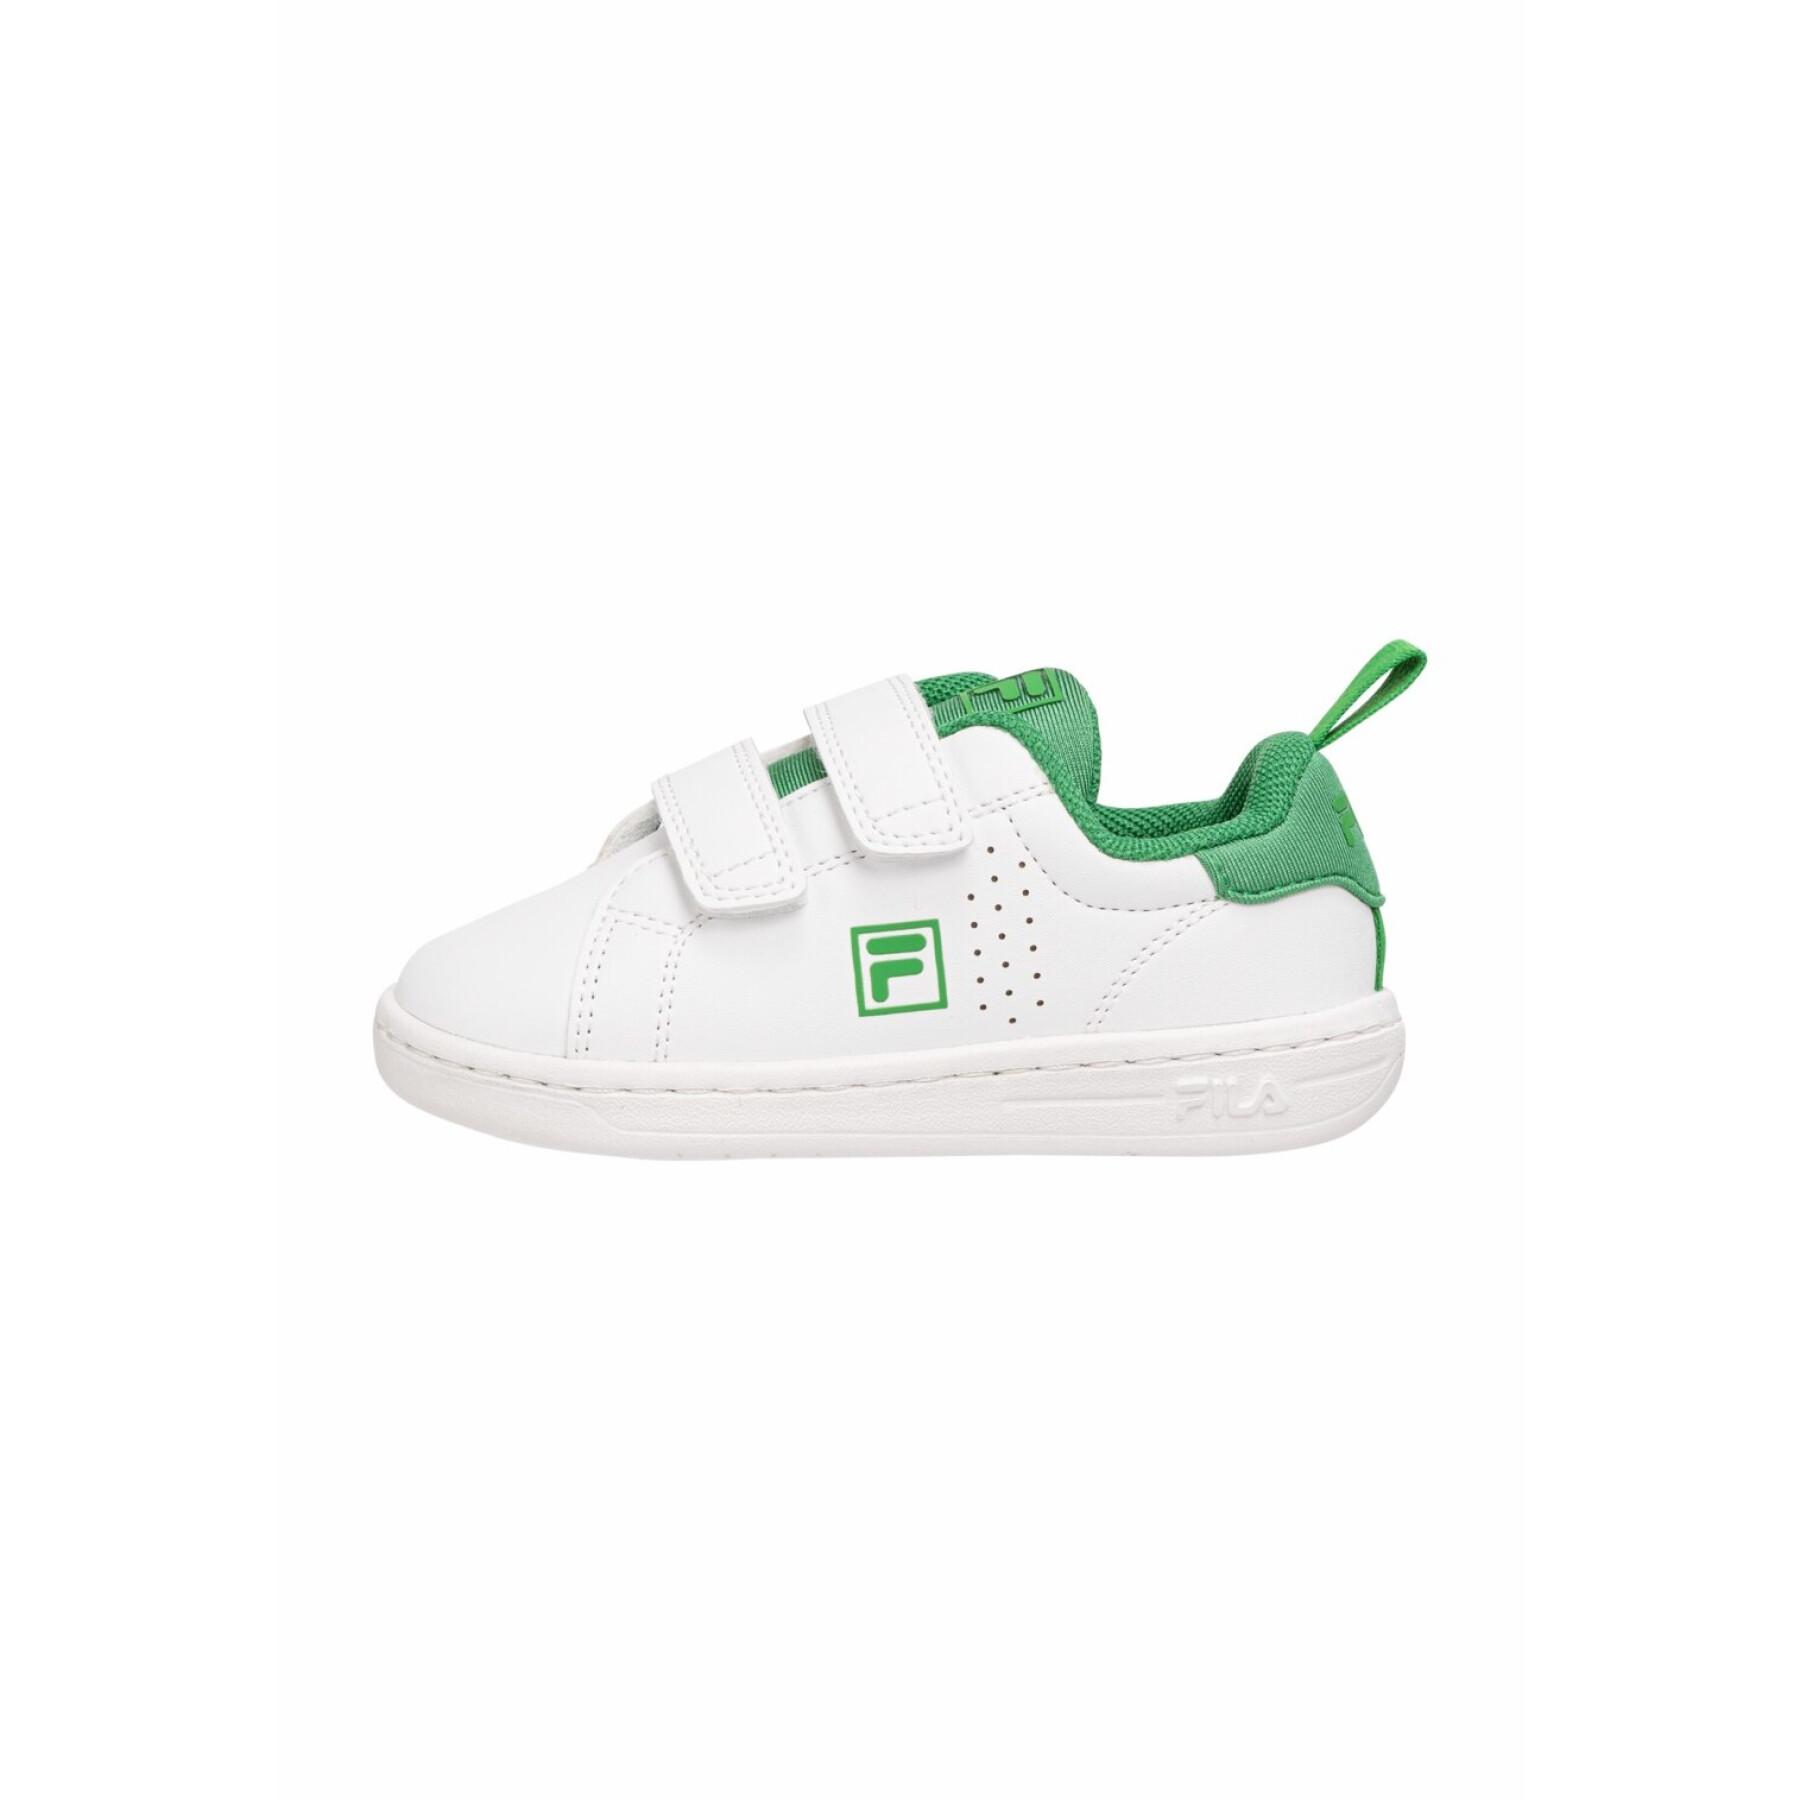 Baby Tdl - Baby Crosscourt Shoes Velcro Fila sneakers 2 - Nt Baby - Sneakers Baby